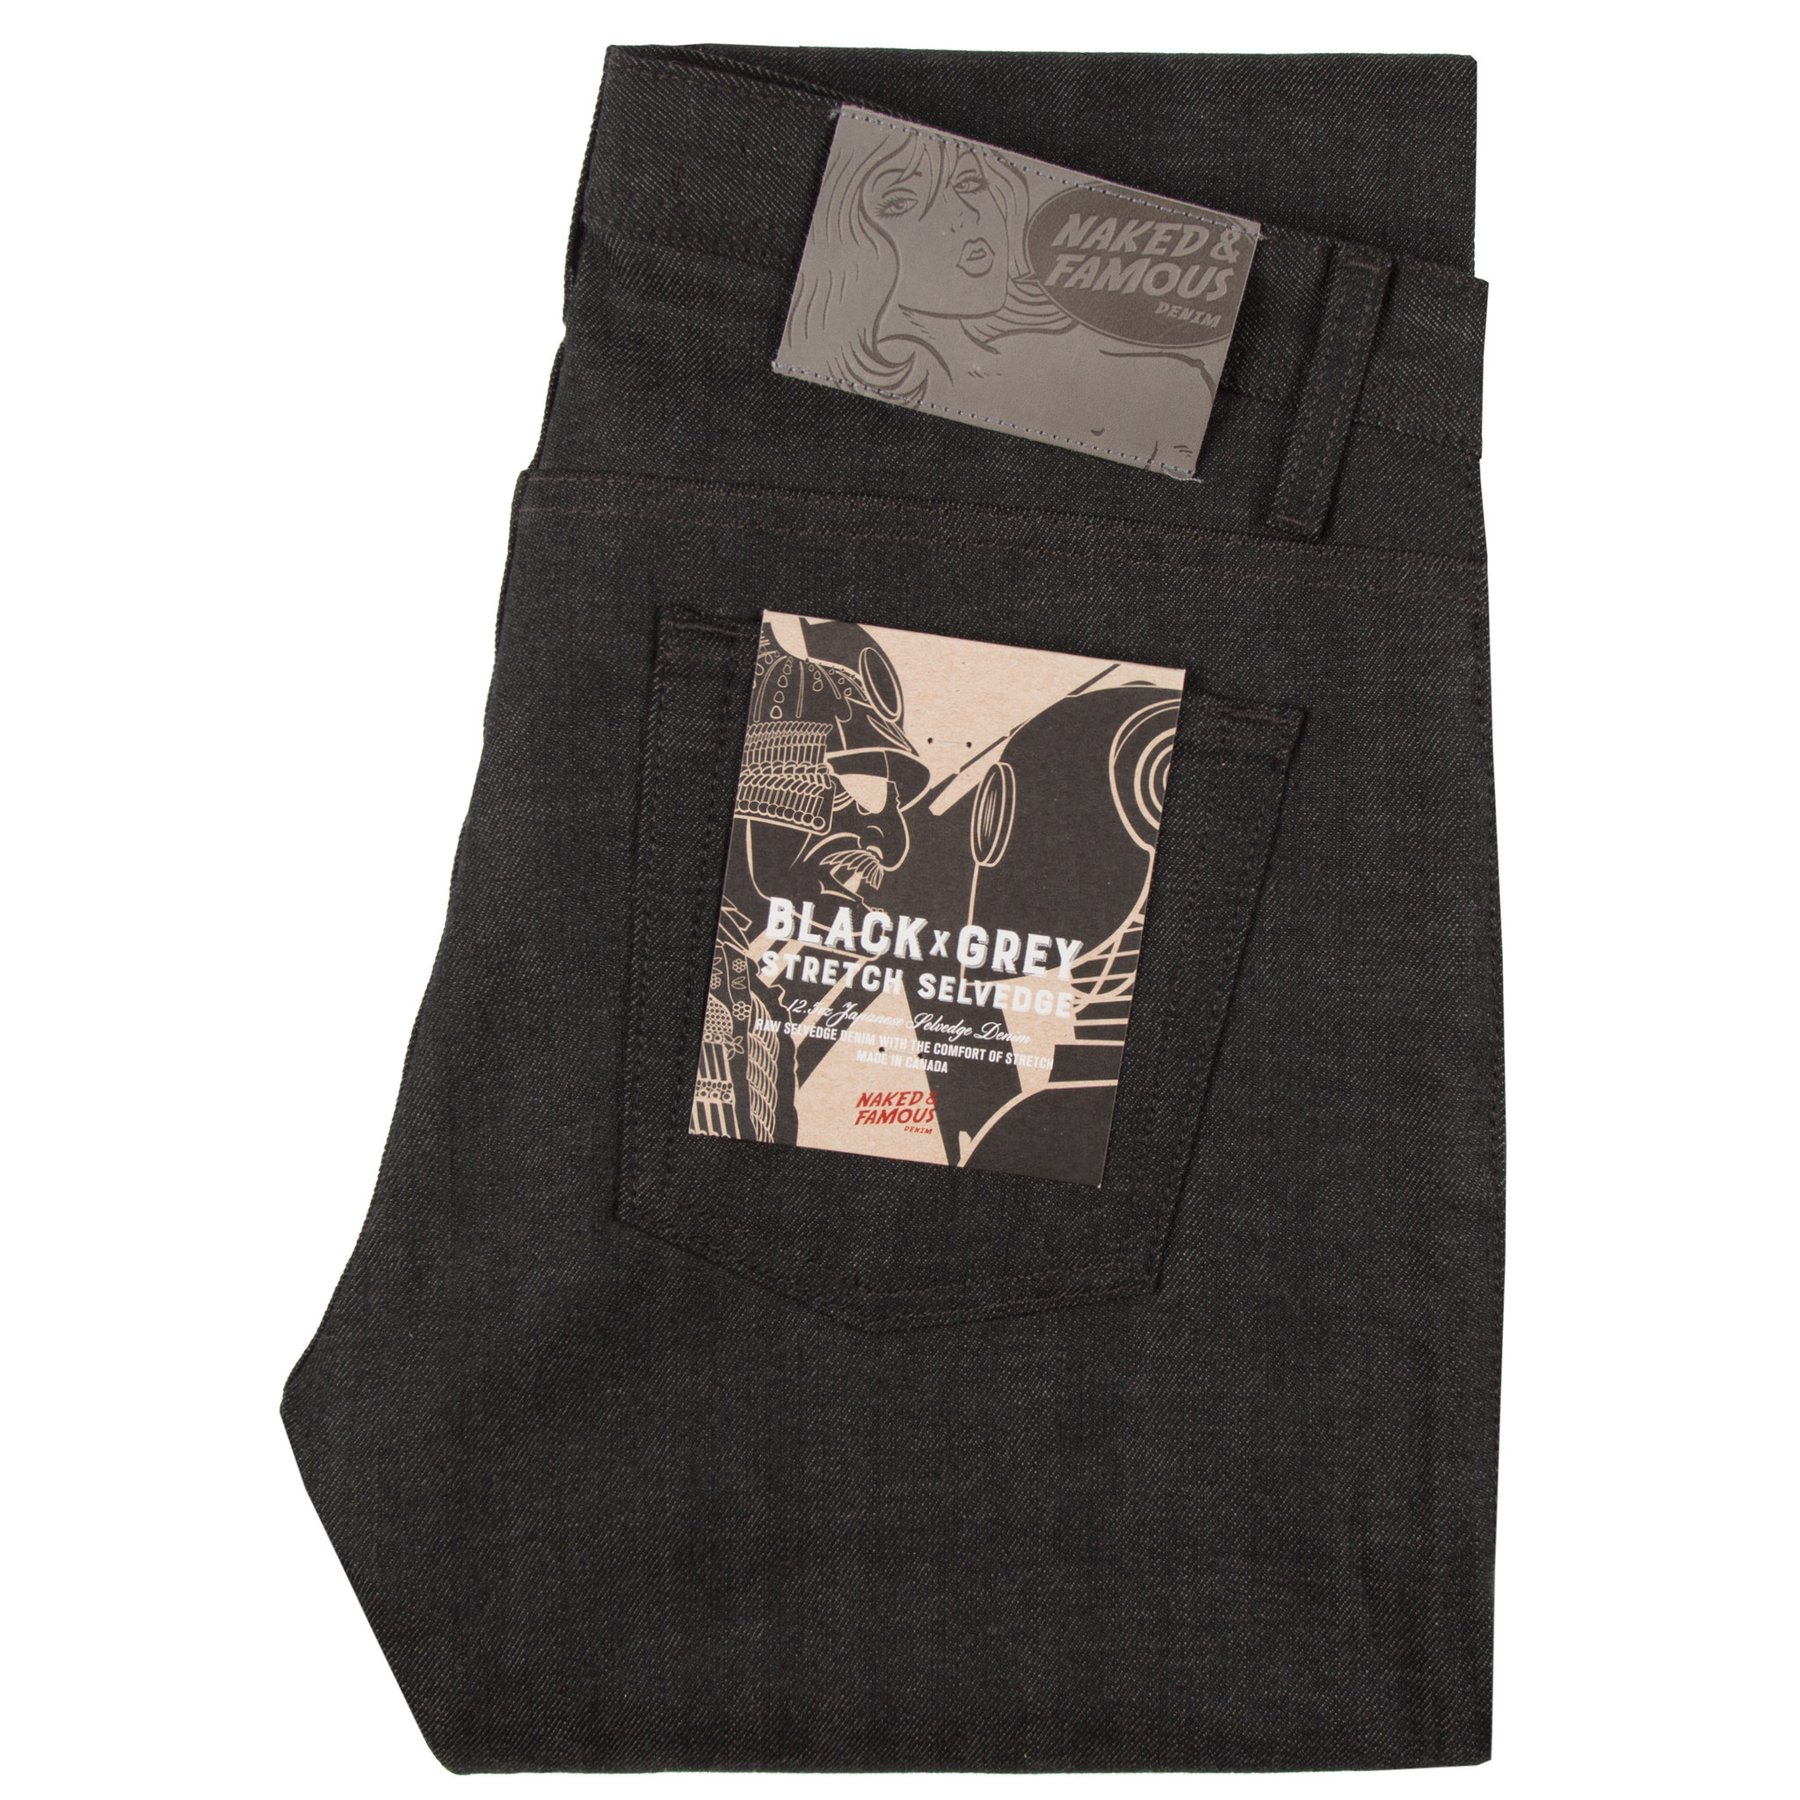  Black x Grey Stretch Selvedge Jeans Folded 